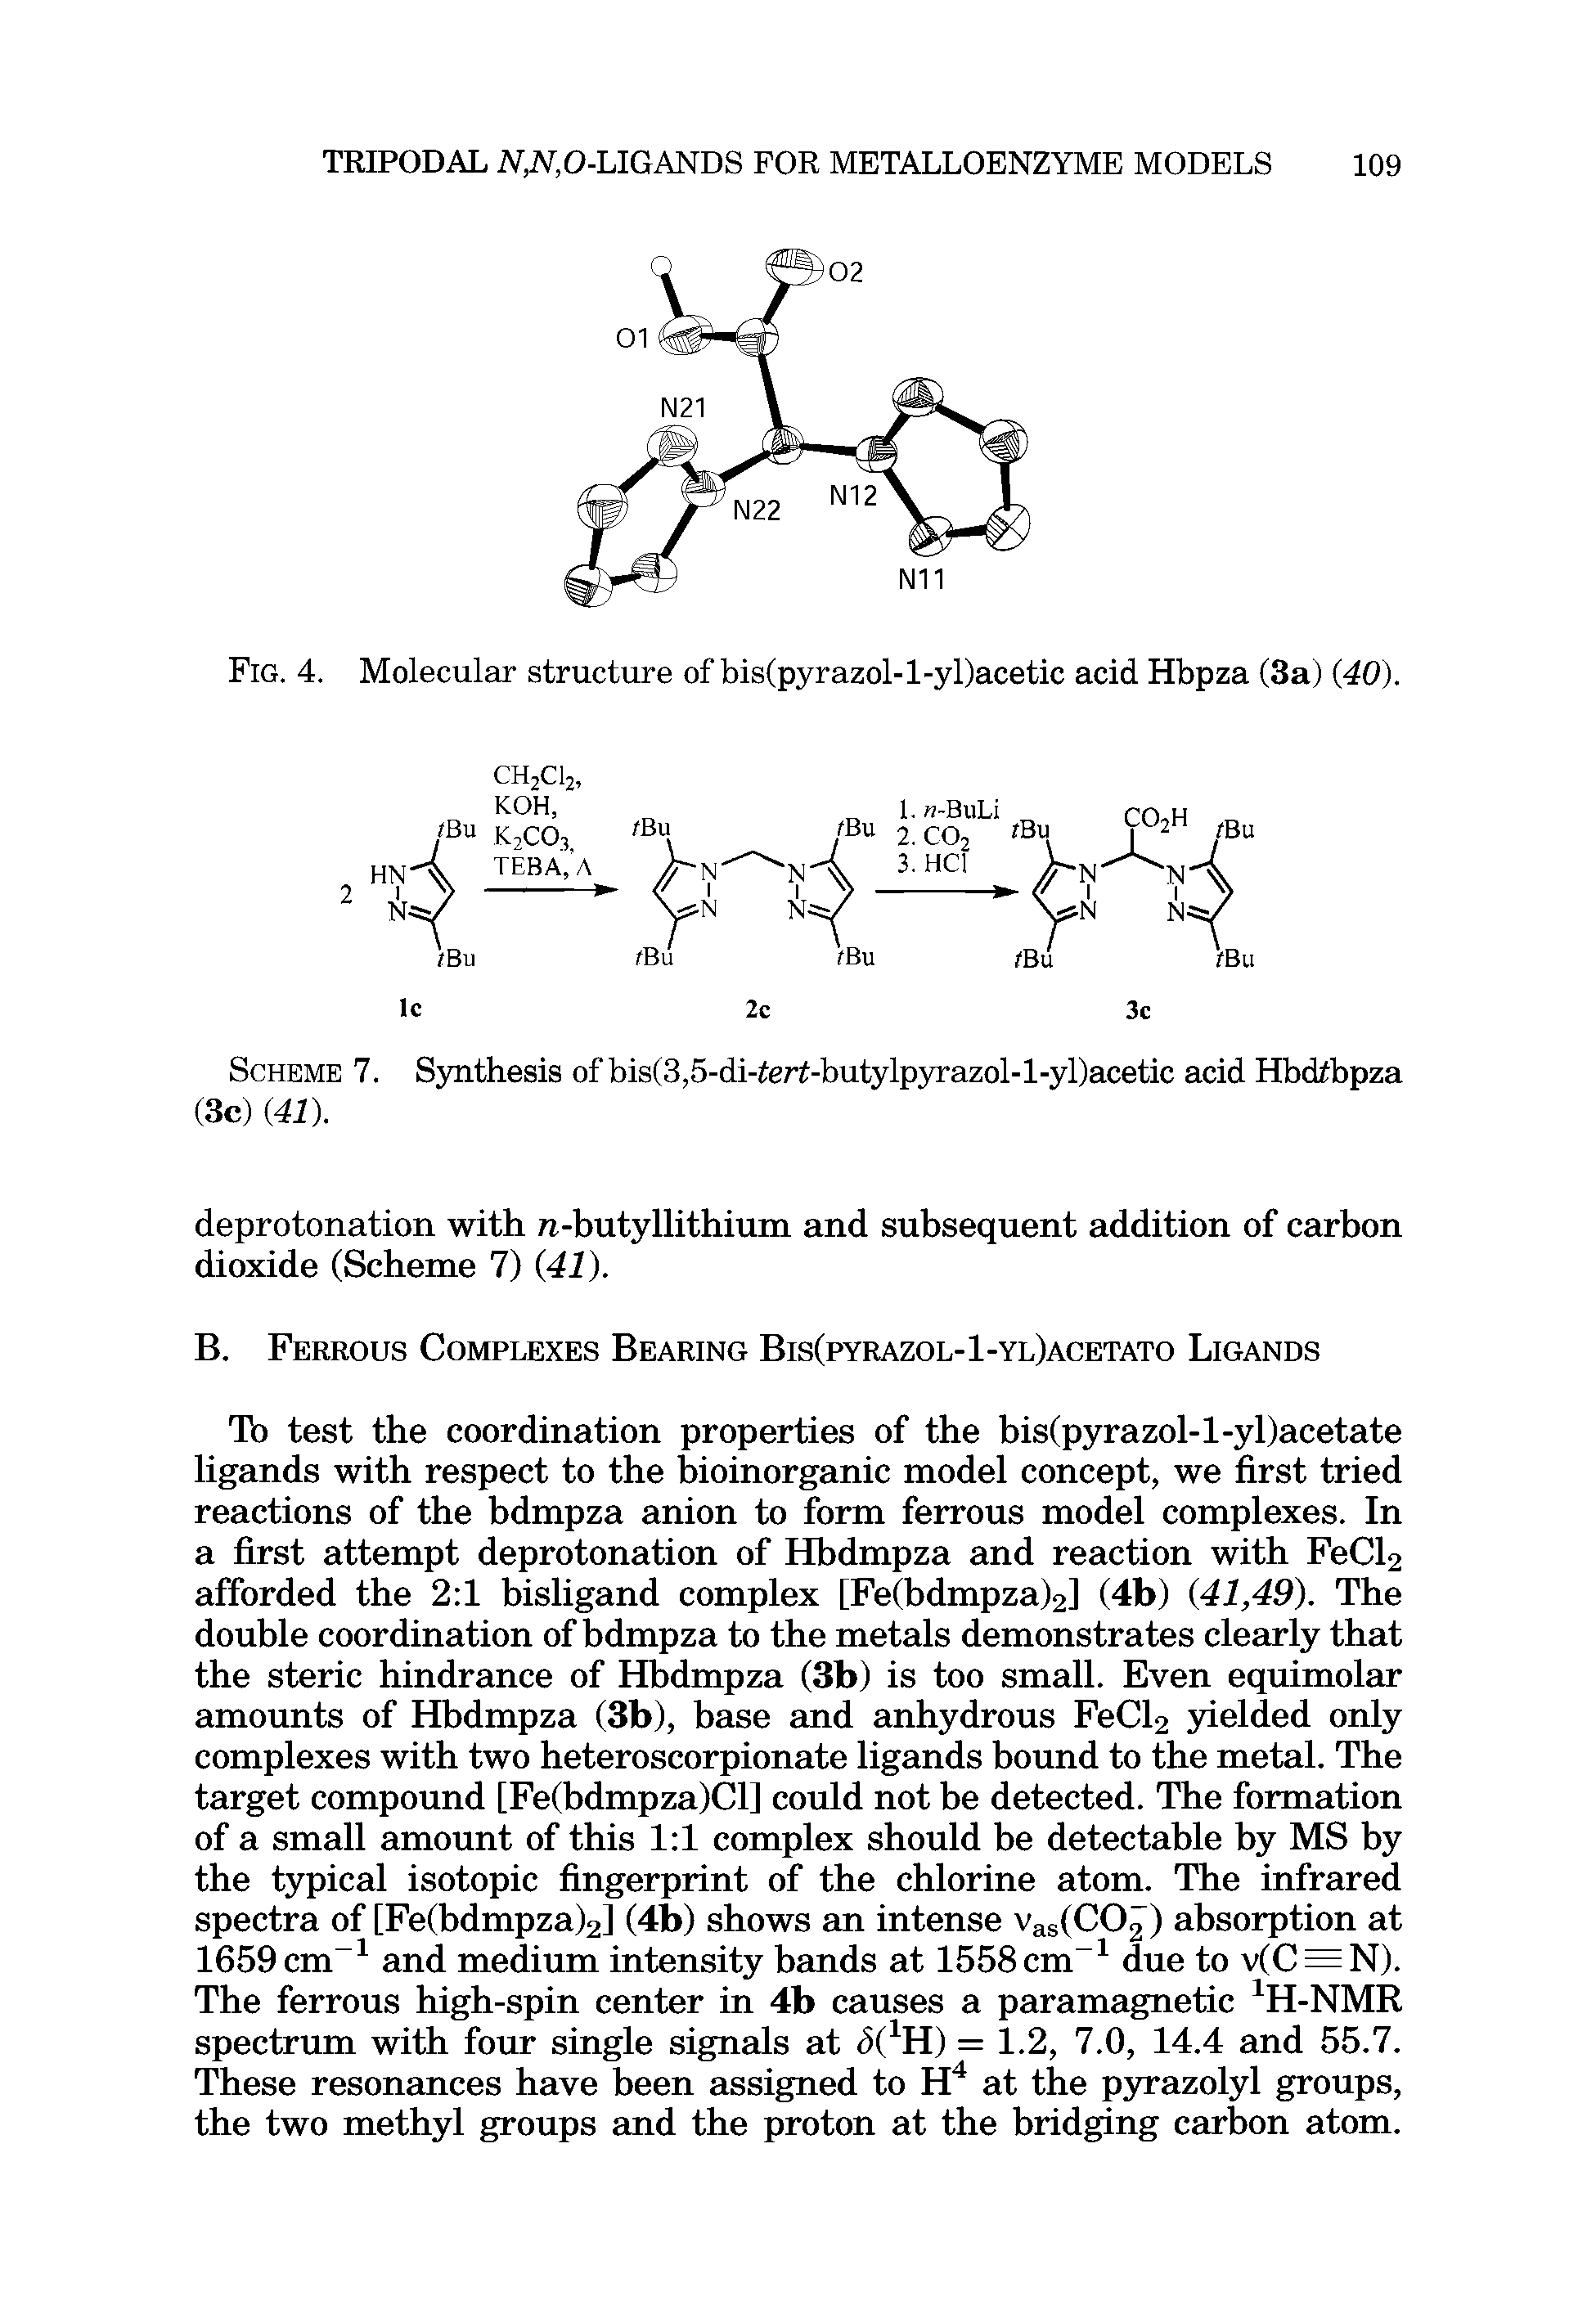 Scheme 7. Synthesis of bis(3,5-di-tert-butylpyrazol-l-yl)acetic acid Hbdtbpza (3c) (41).